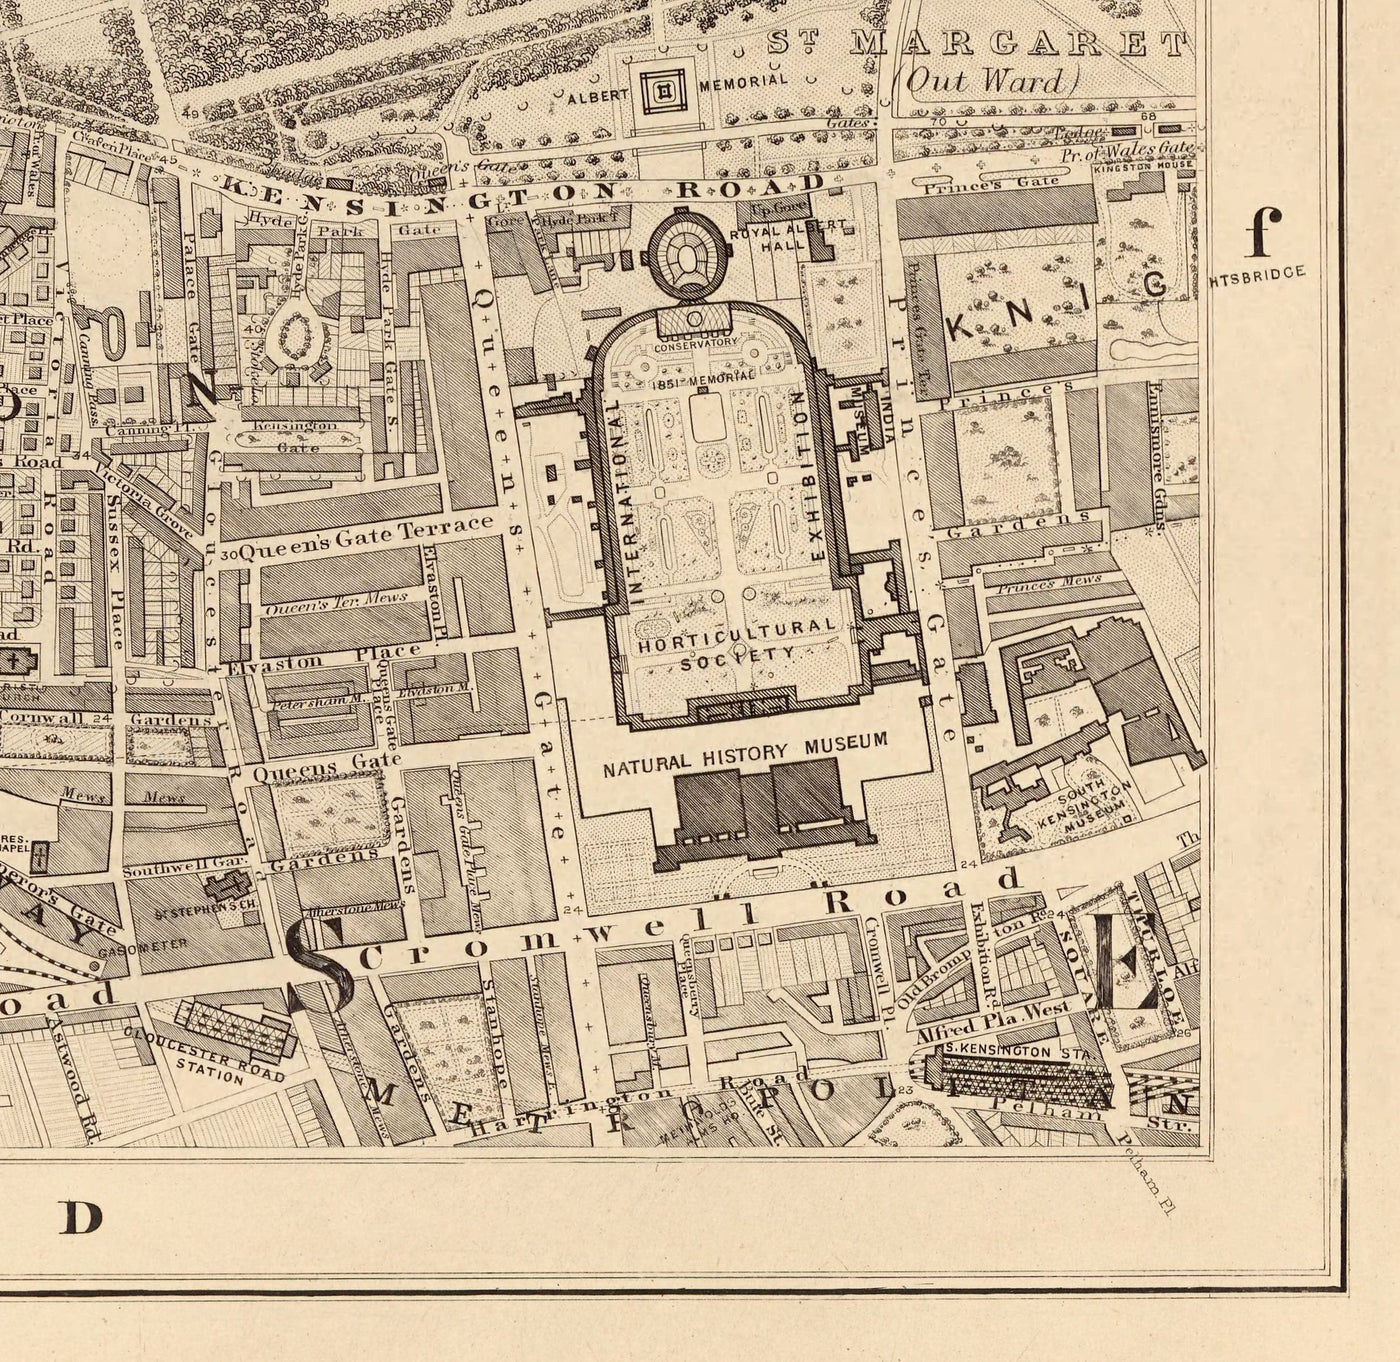 Ancienne carte de West London, 1862 par Edward Stanford - Notting Hill, Kensington, Portobello Road, Bergers Bush, Bayswater - W11, W2, W8, SW7, W14, W6, W12, W10